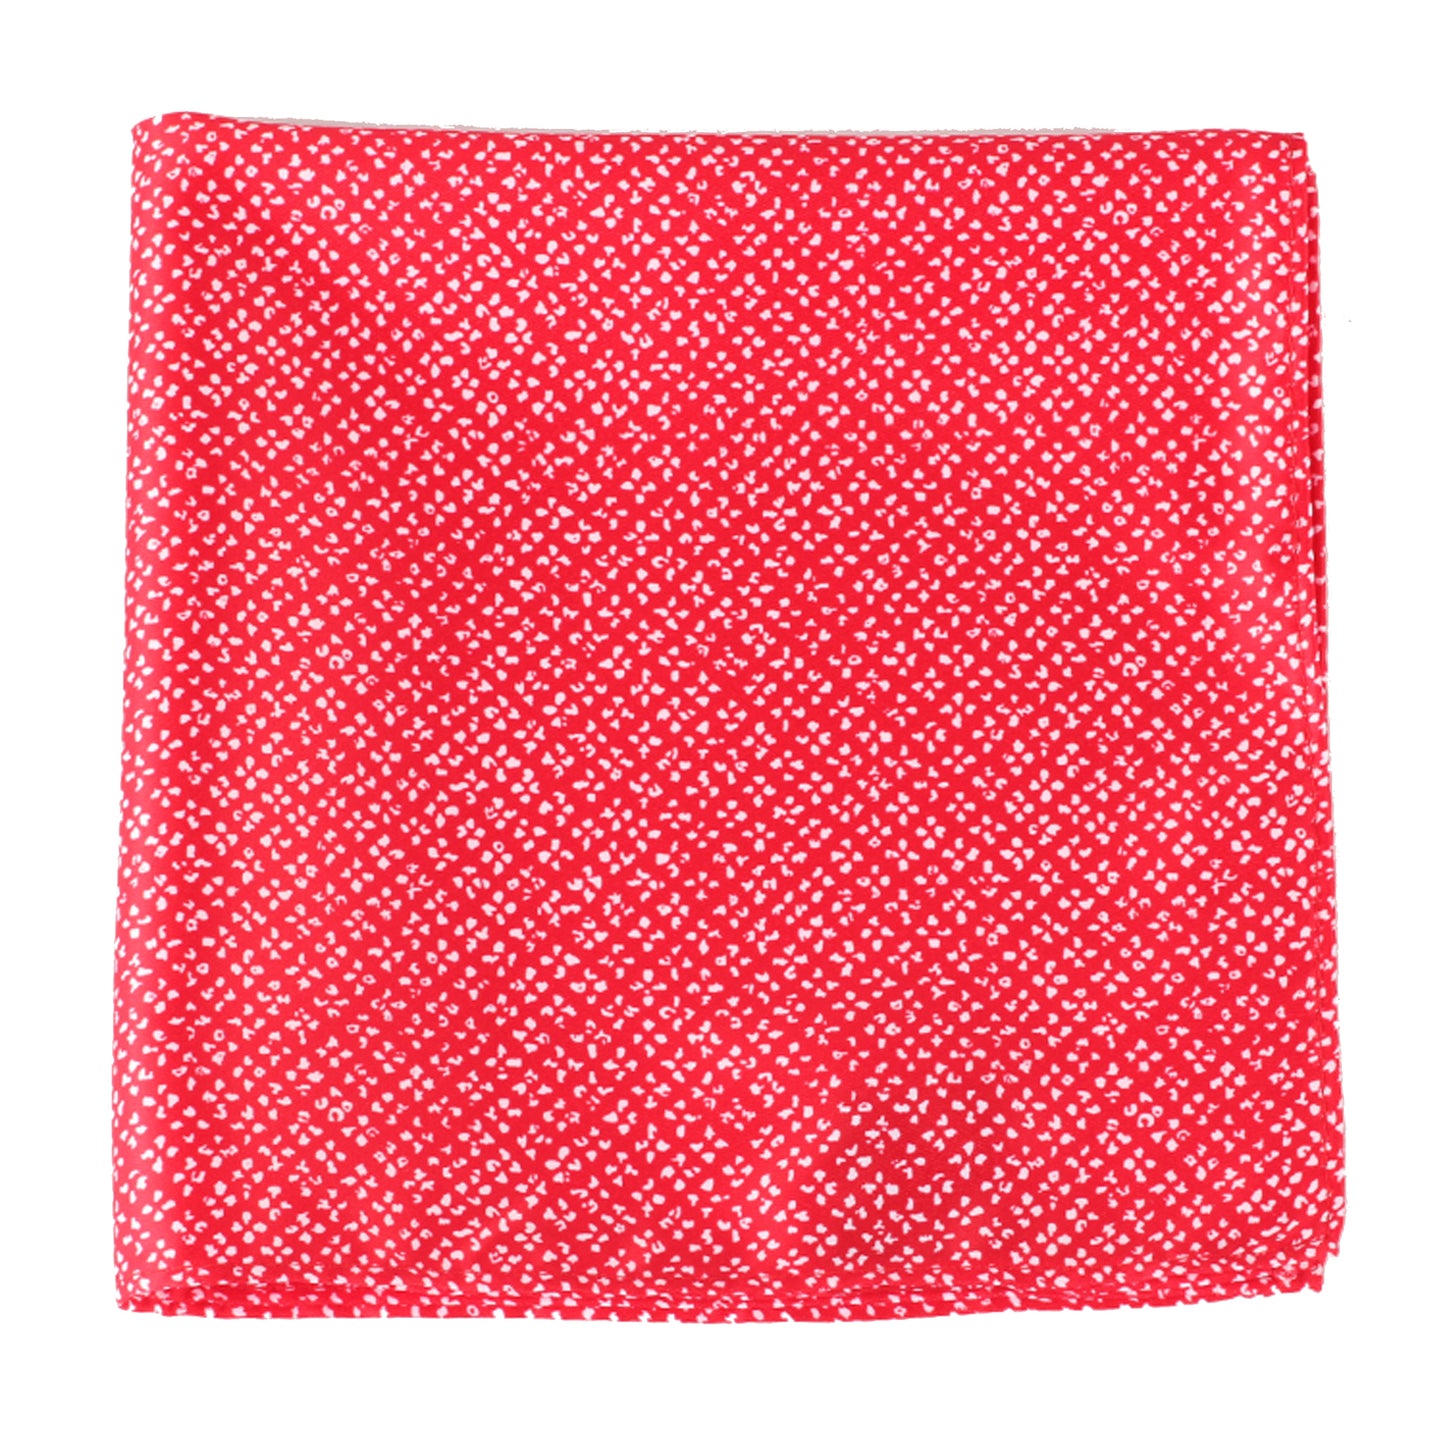 Red Distressed Pocket Square + SquareGuard